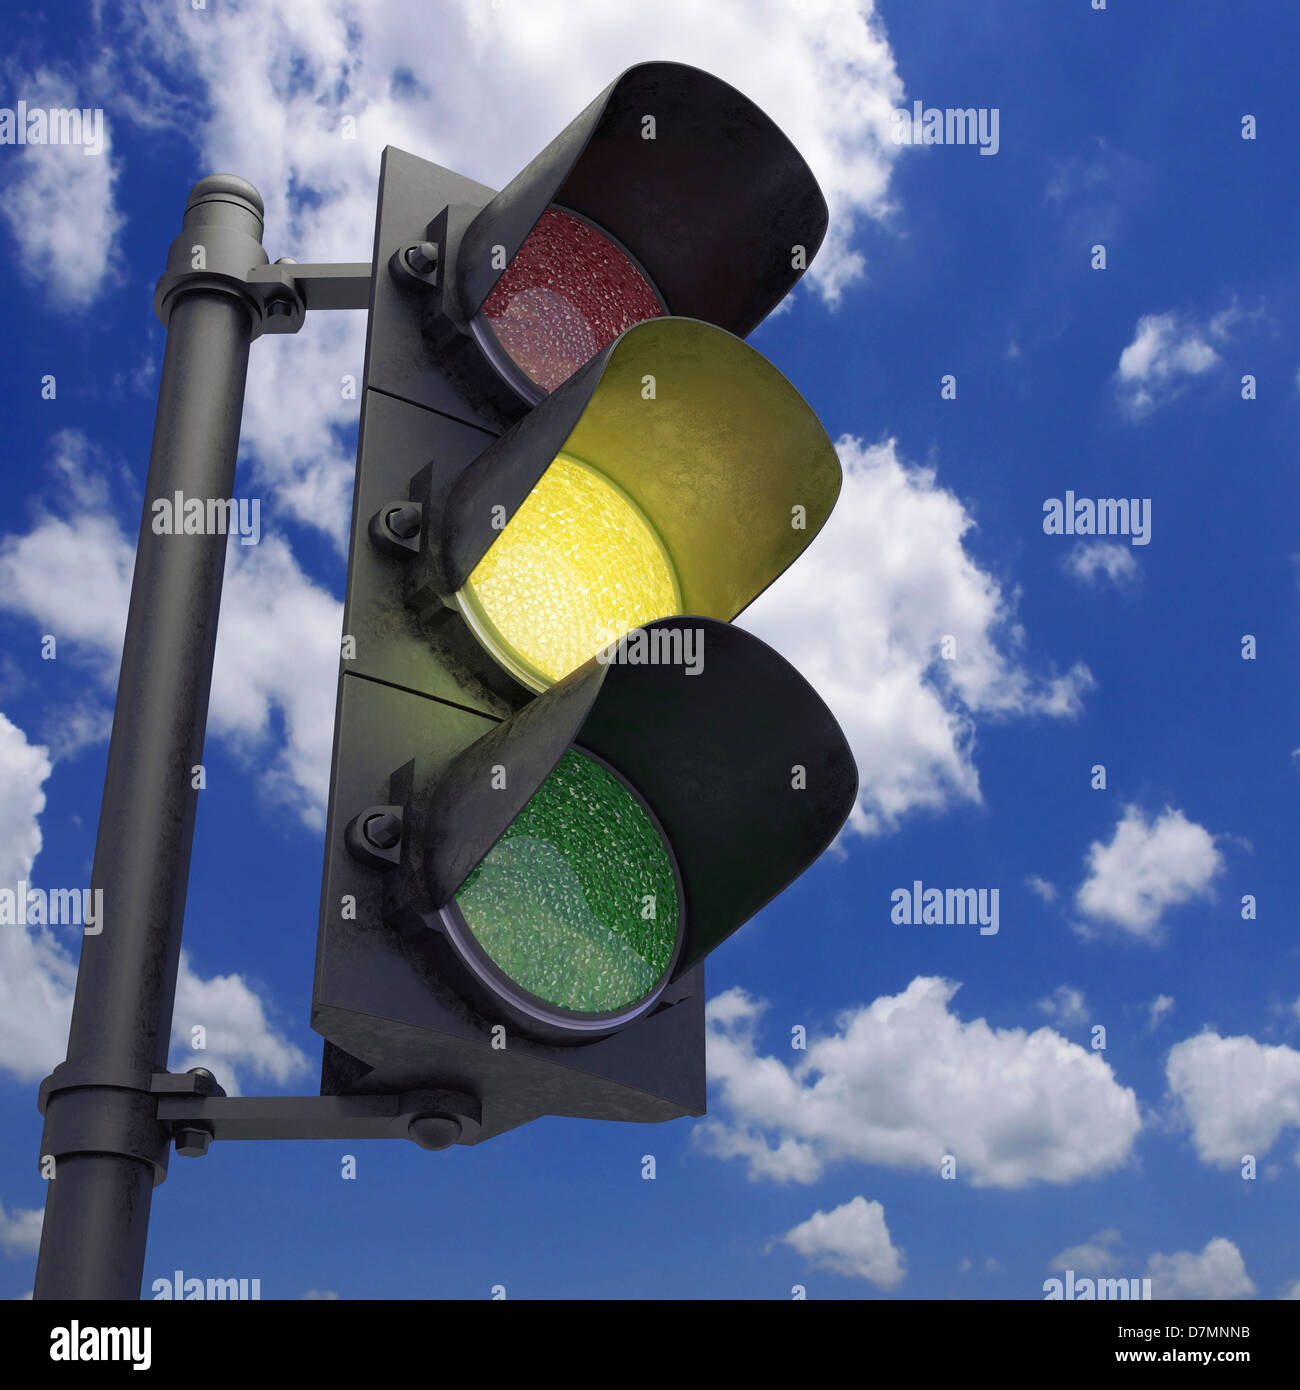 Amber traffic light, artwork Stock Photo